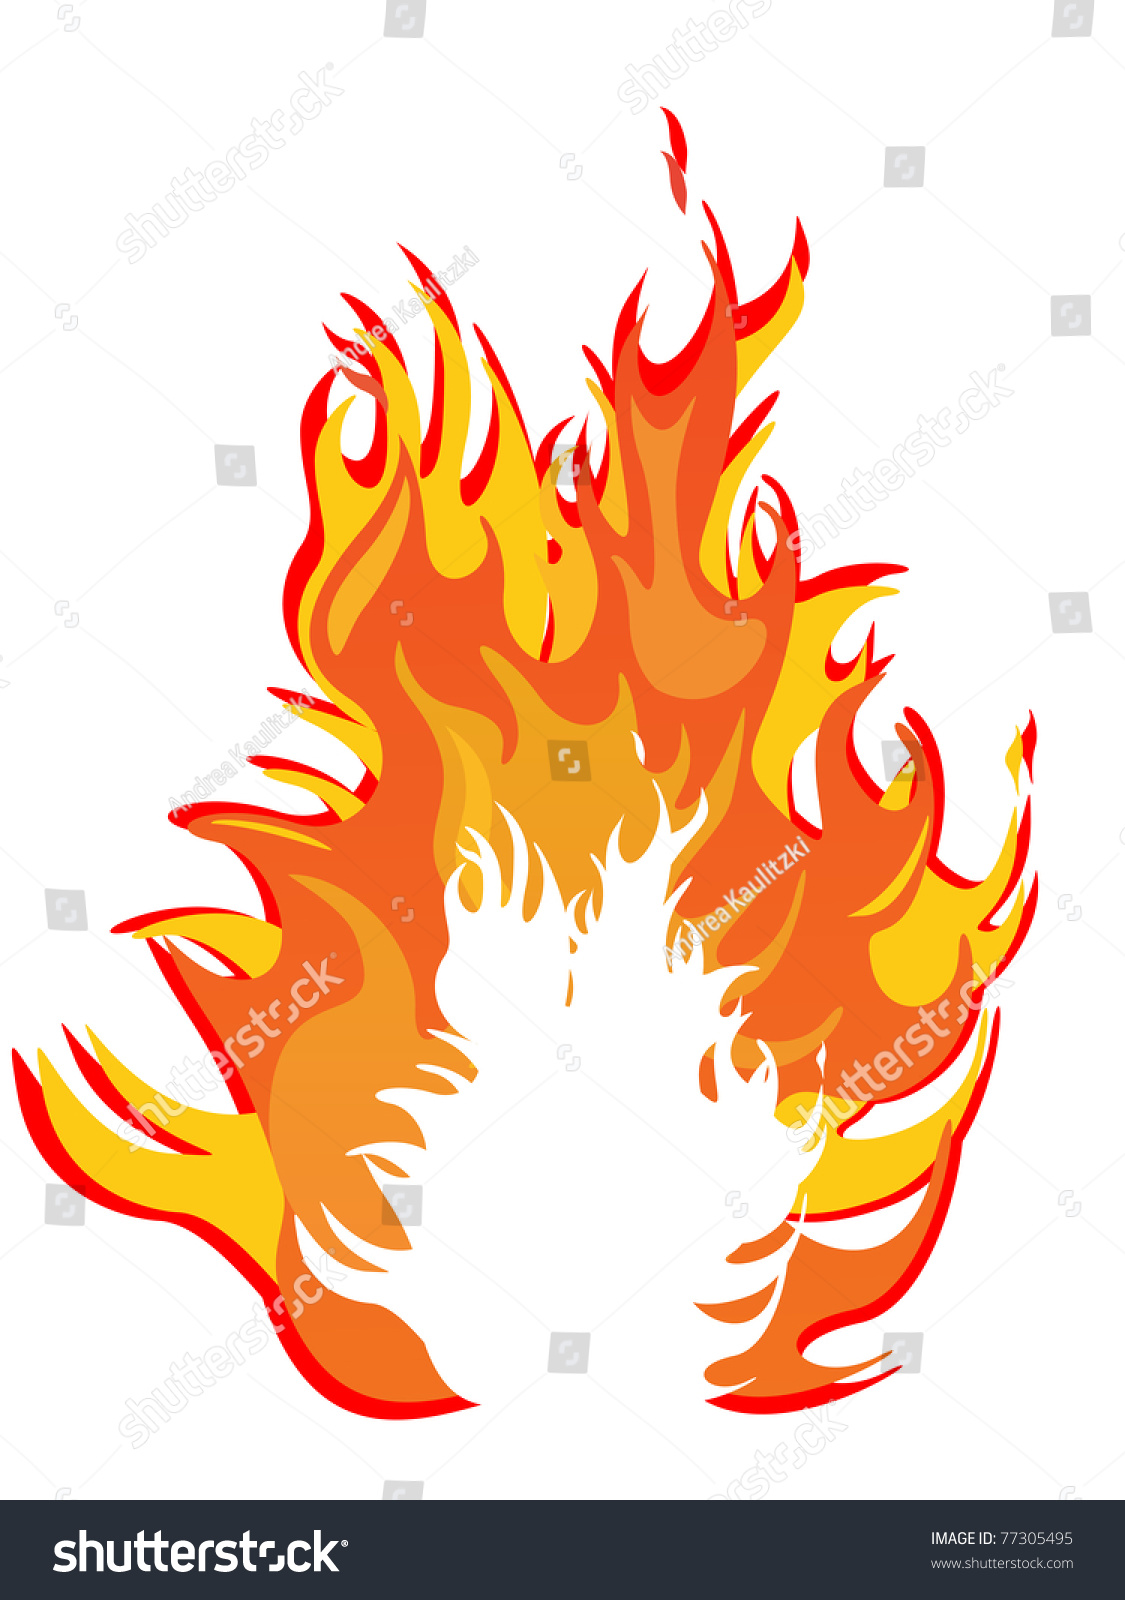 Fire Flames Vector Stock Vector 77305495 - Shutterstock